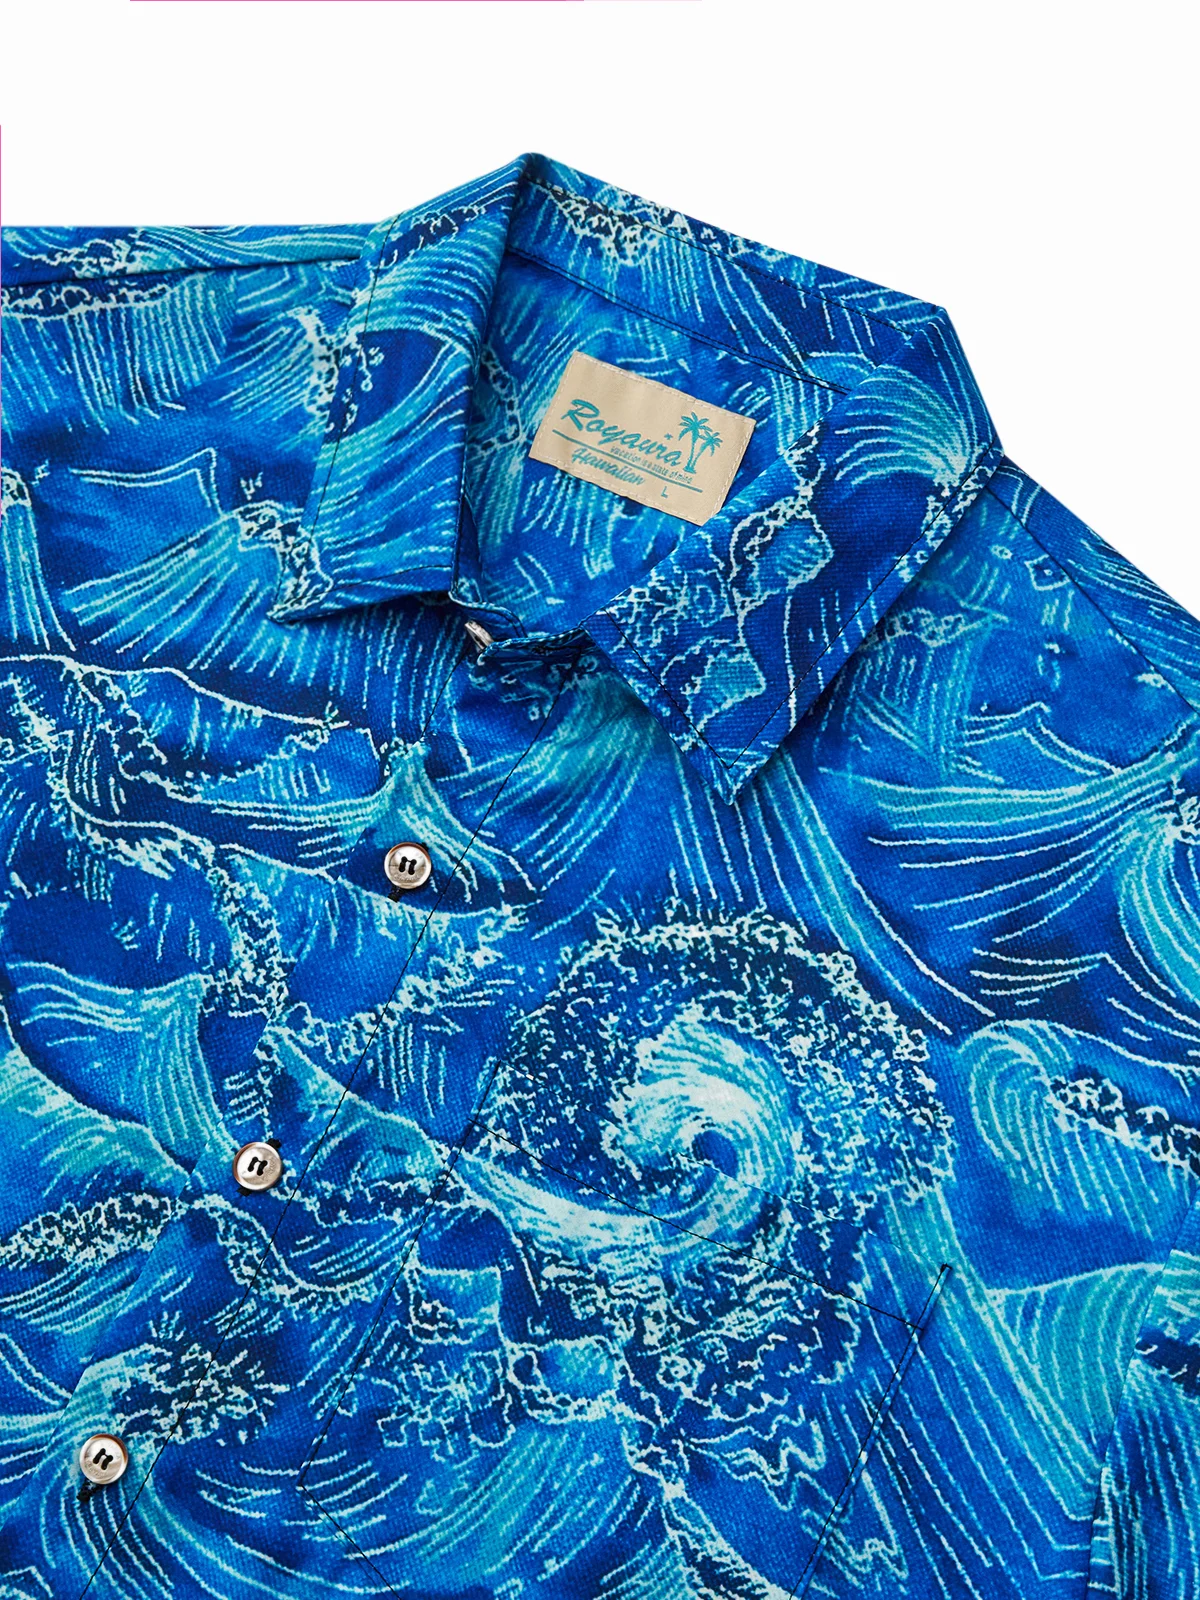 Royaura® Vintage Japanese Blue Men's Hawaiian Shirt Stretch Easy Care Camp Shirt Big Tall